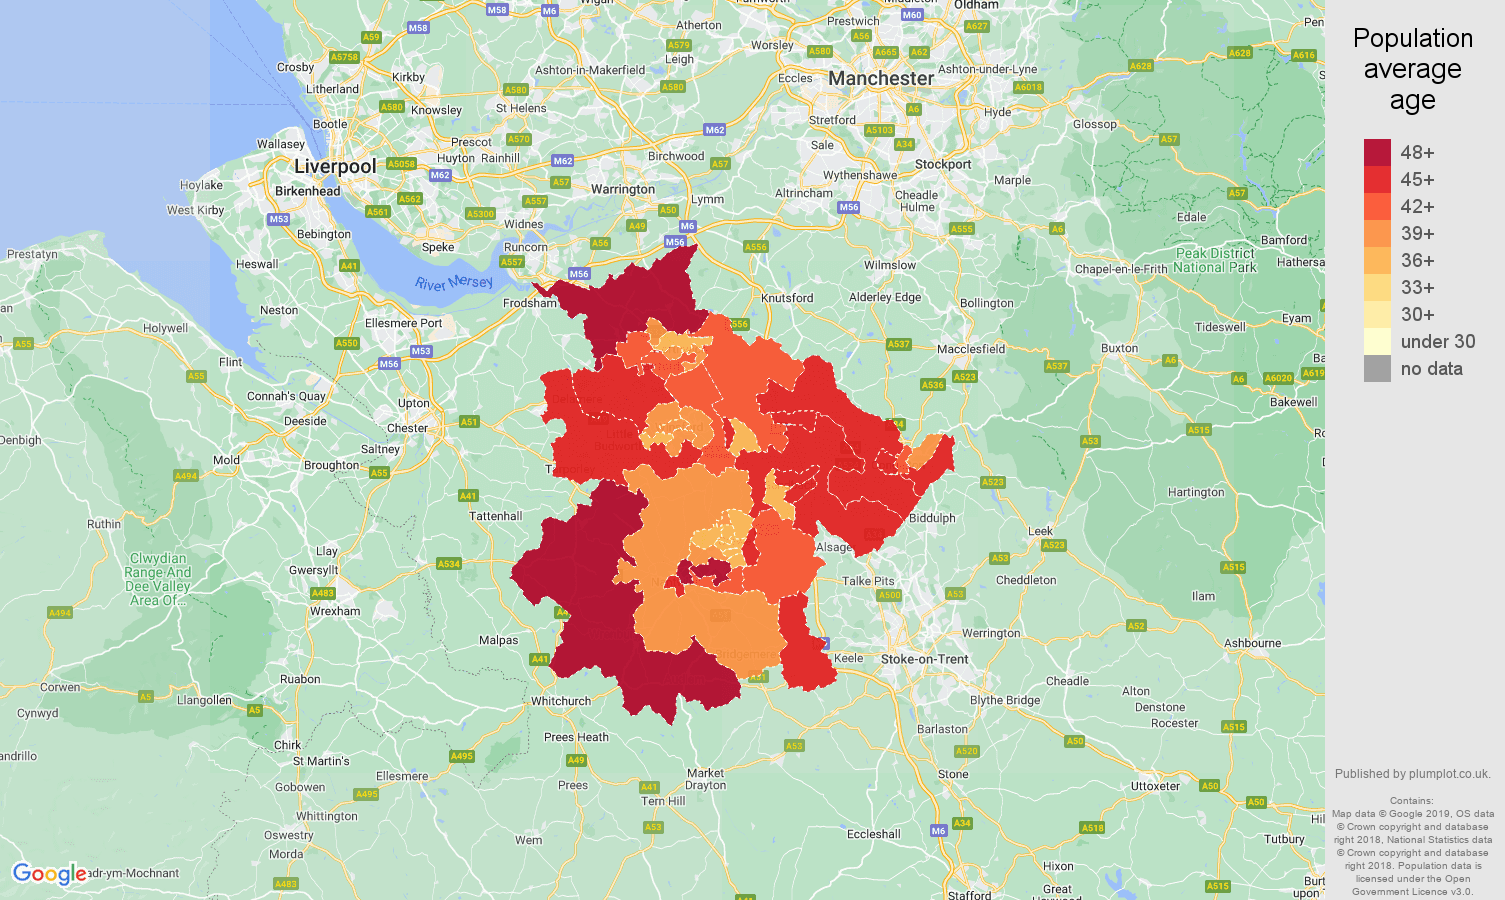 Crewe population average age map